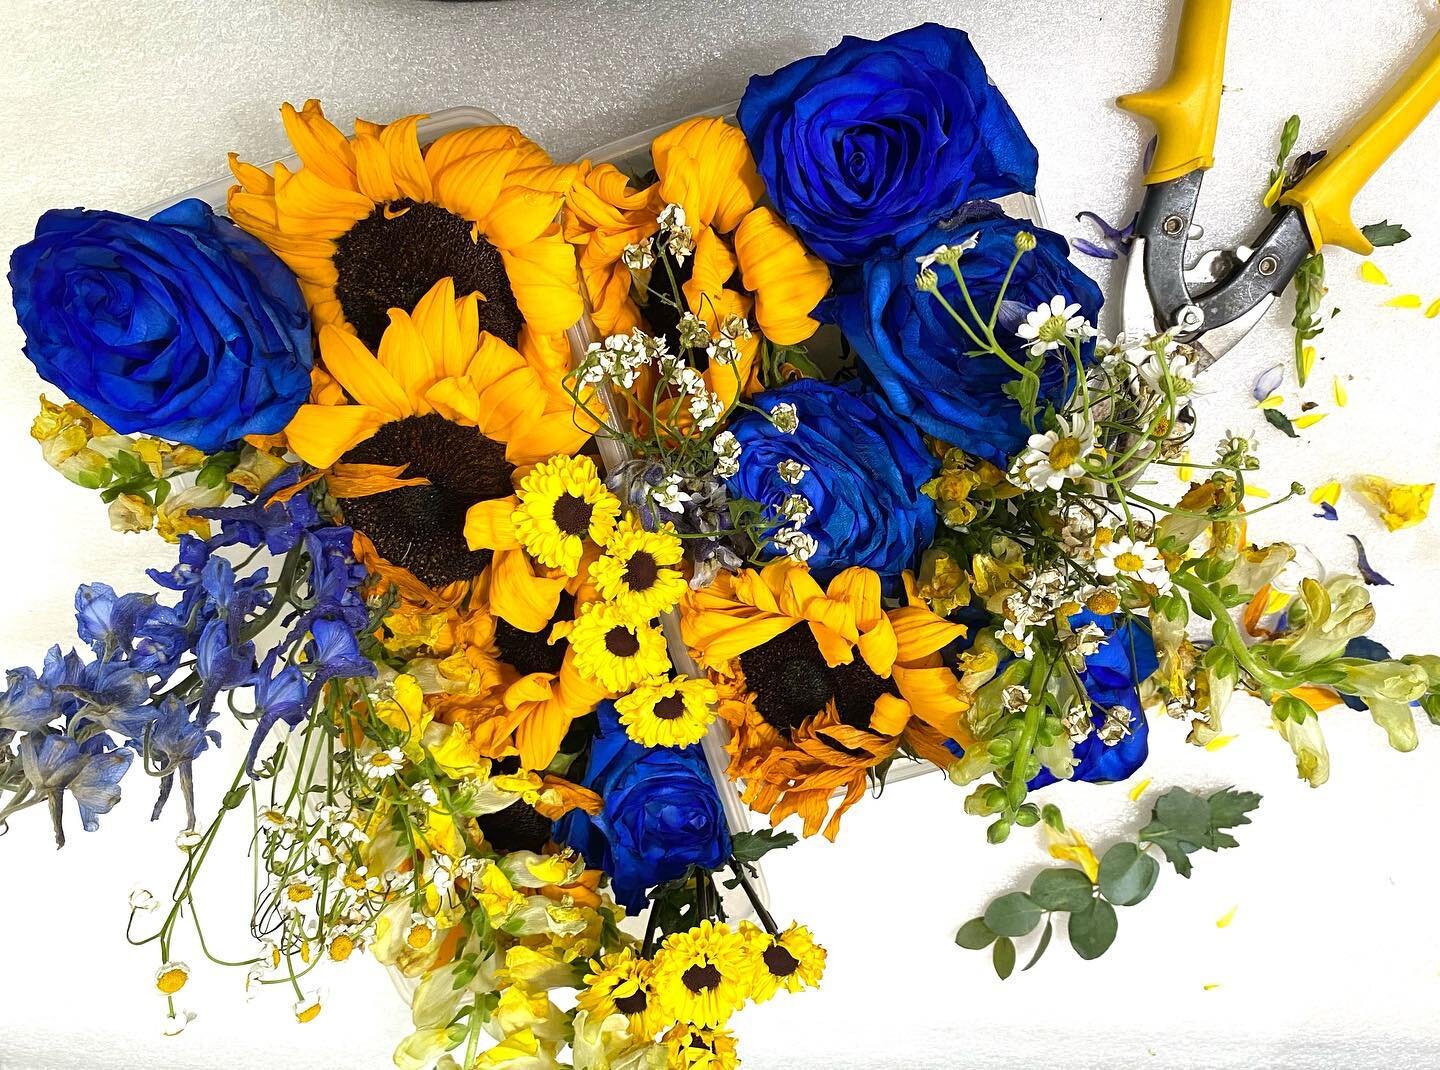 Spring Mountain Wedding Bouquet.  Preserving these beauties today.  #preservedbridalbouquet #mountainwedding #sunflower #blueroses #bridalbouquets #floralpreservation